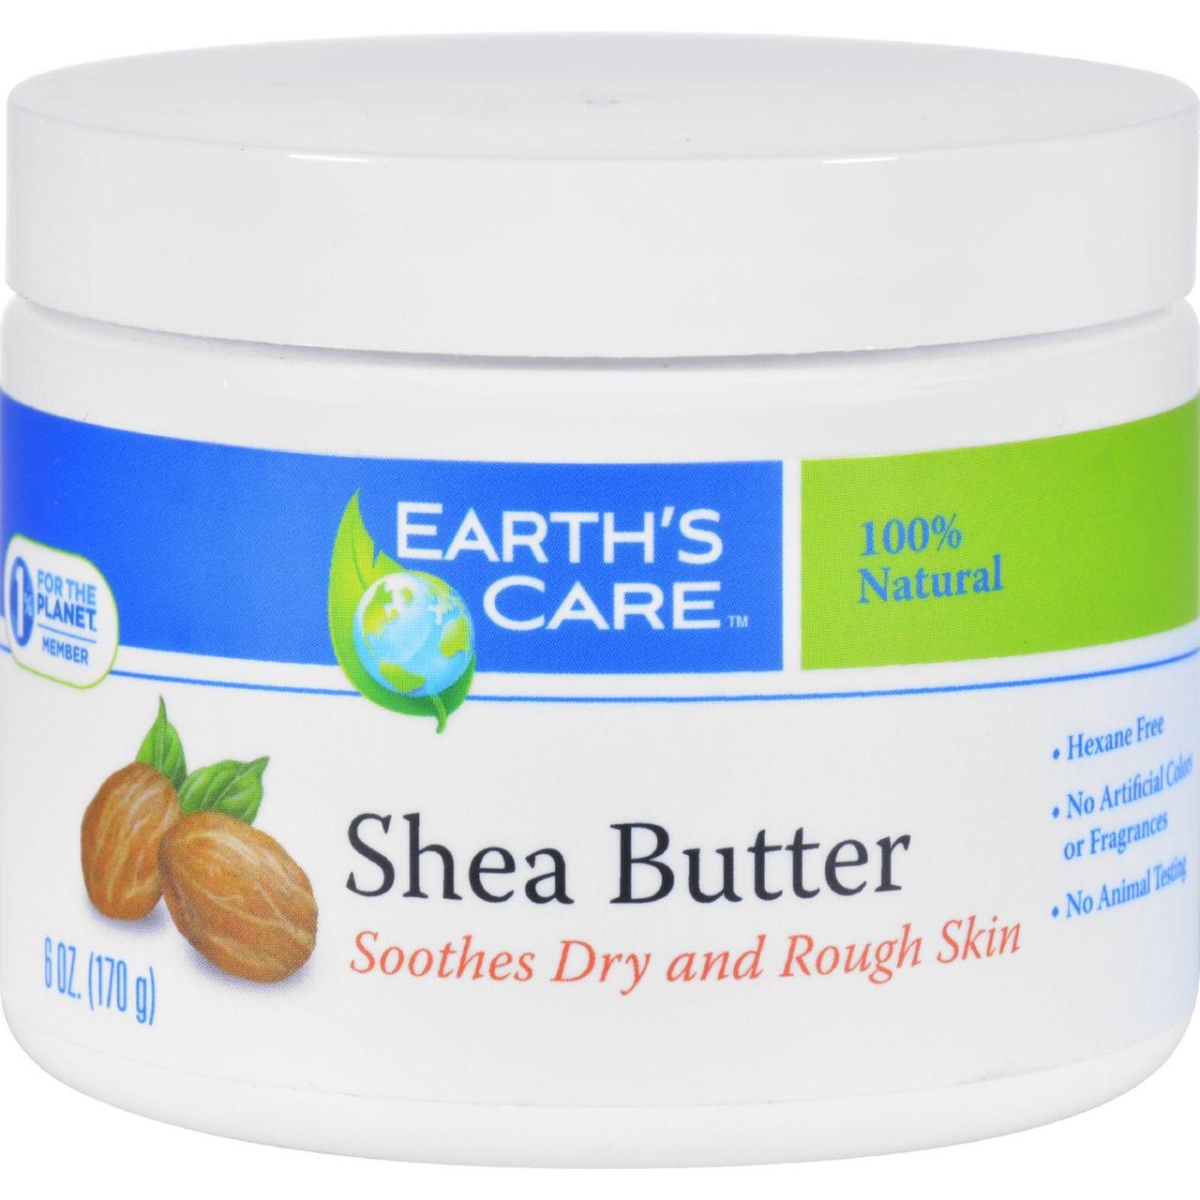 Hg1566223 6 Oz Shea Butter - 100 Percent Pure, Natural